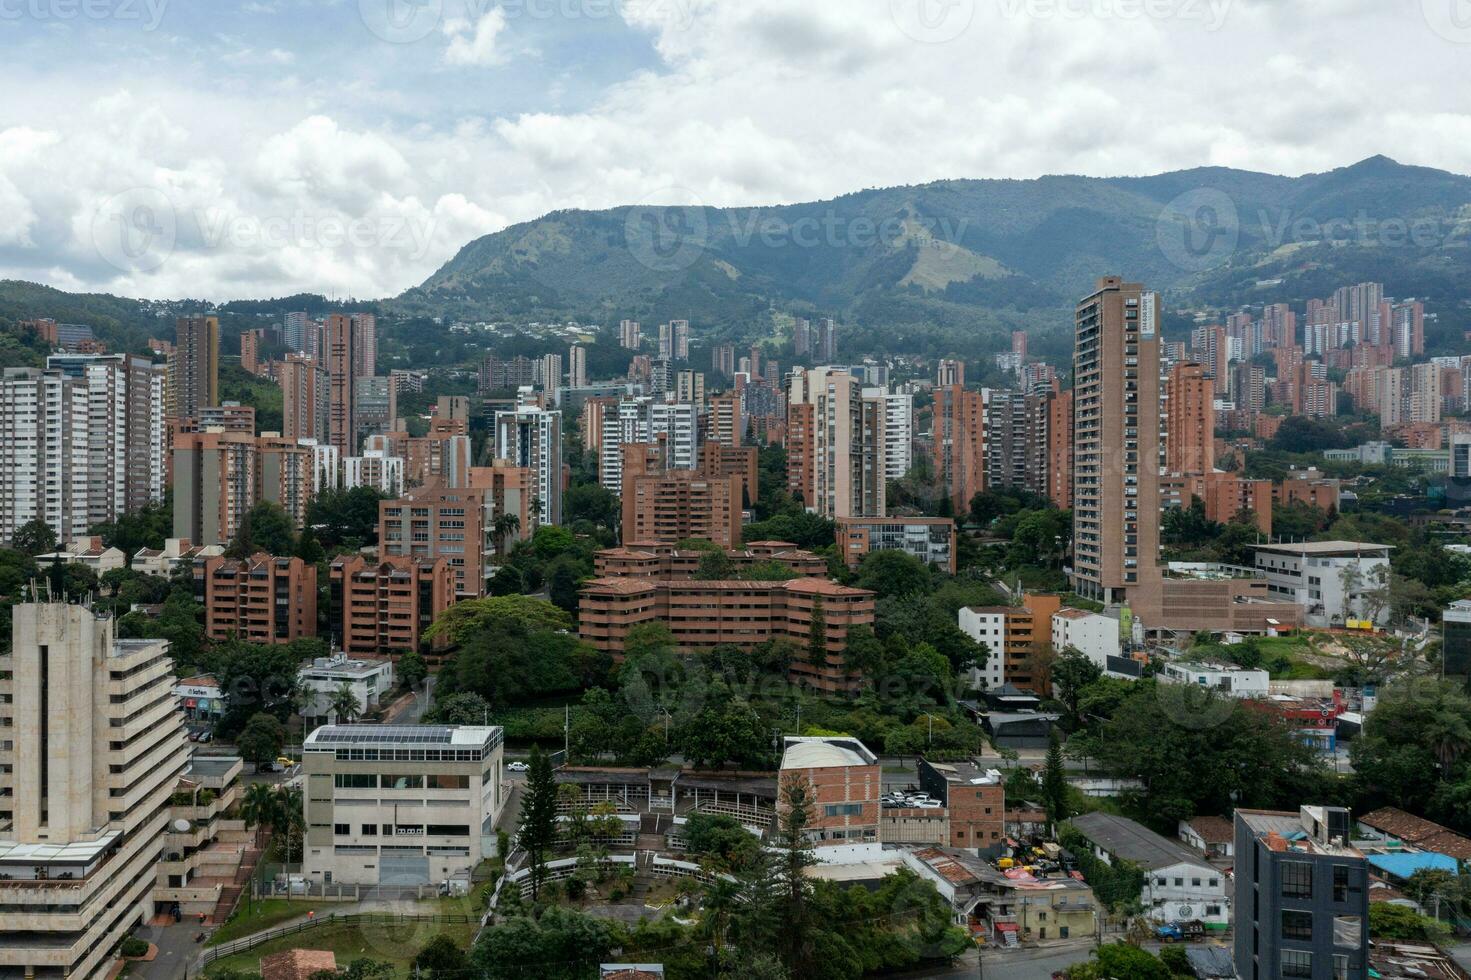 paysage - Bogota, Colombie photo